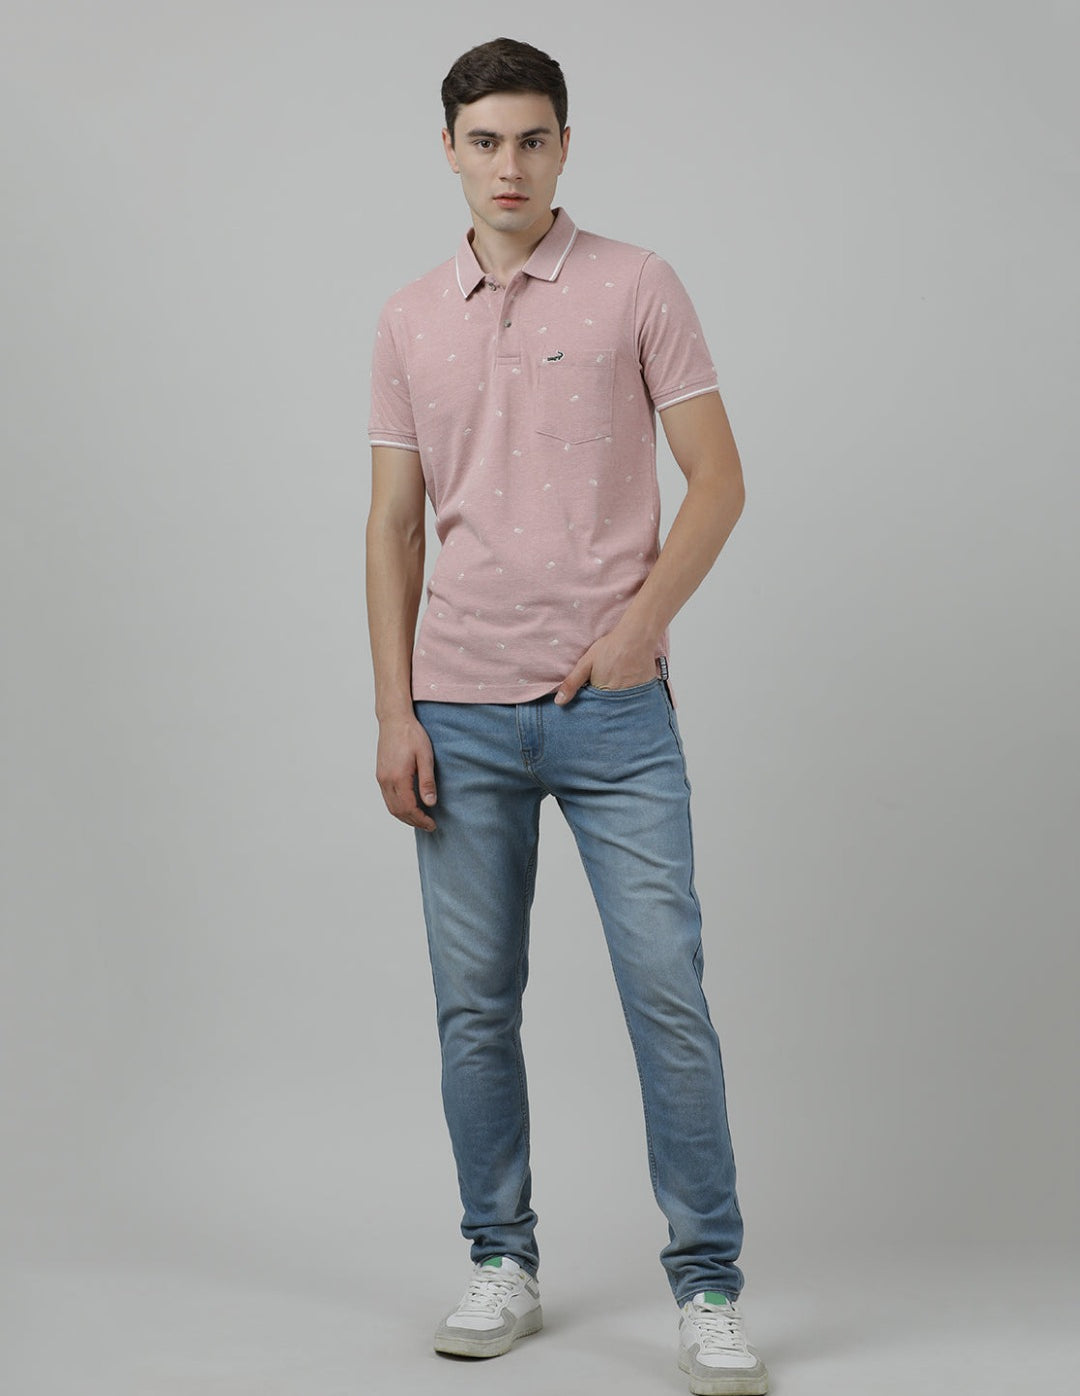 Crocodile Casual Pink Printed T-Shirt Half Sleeve Slim Fit Melange with Collar for Men